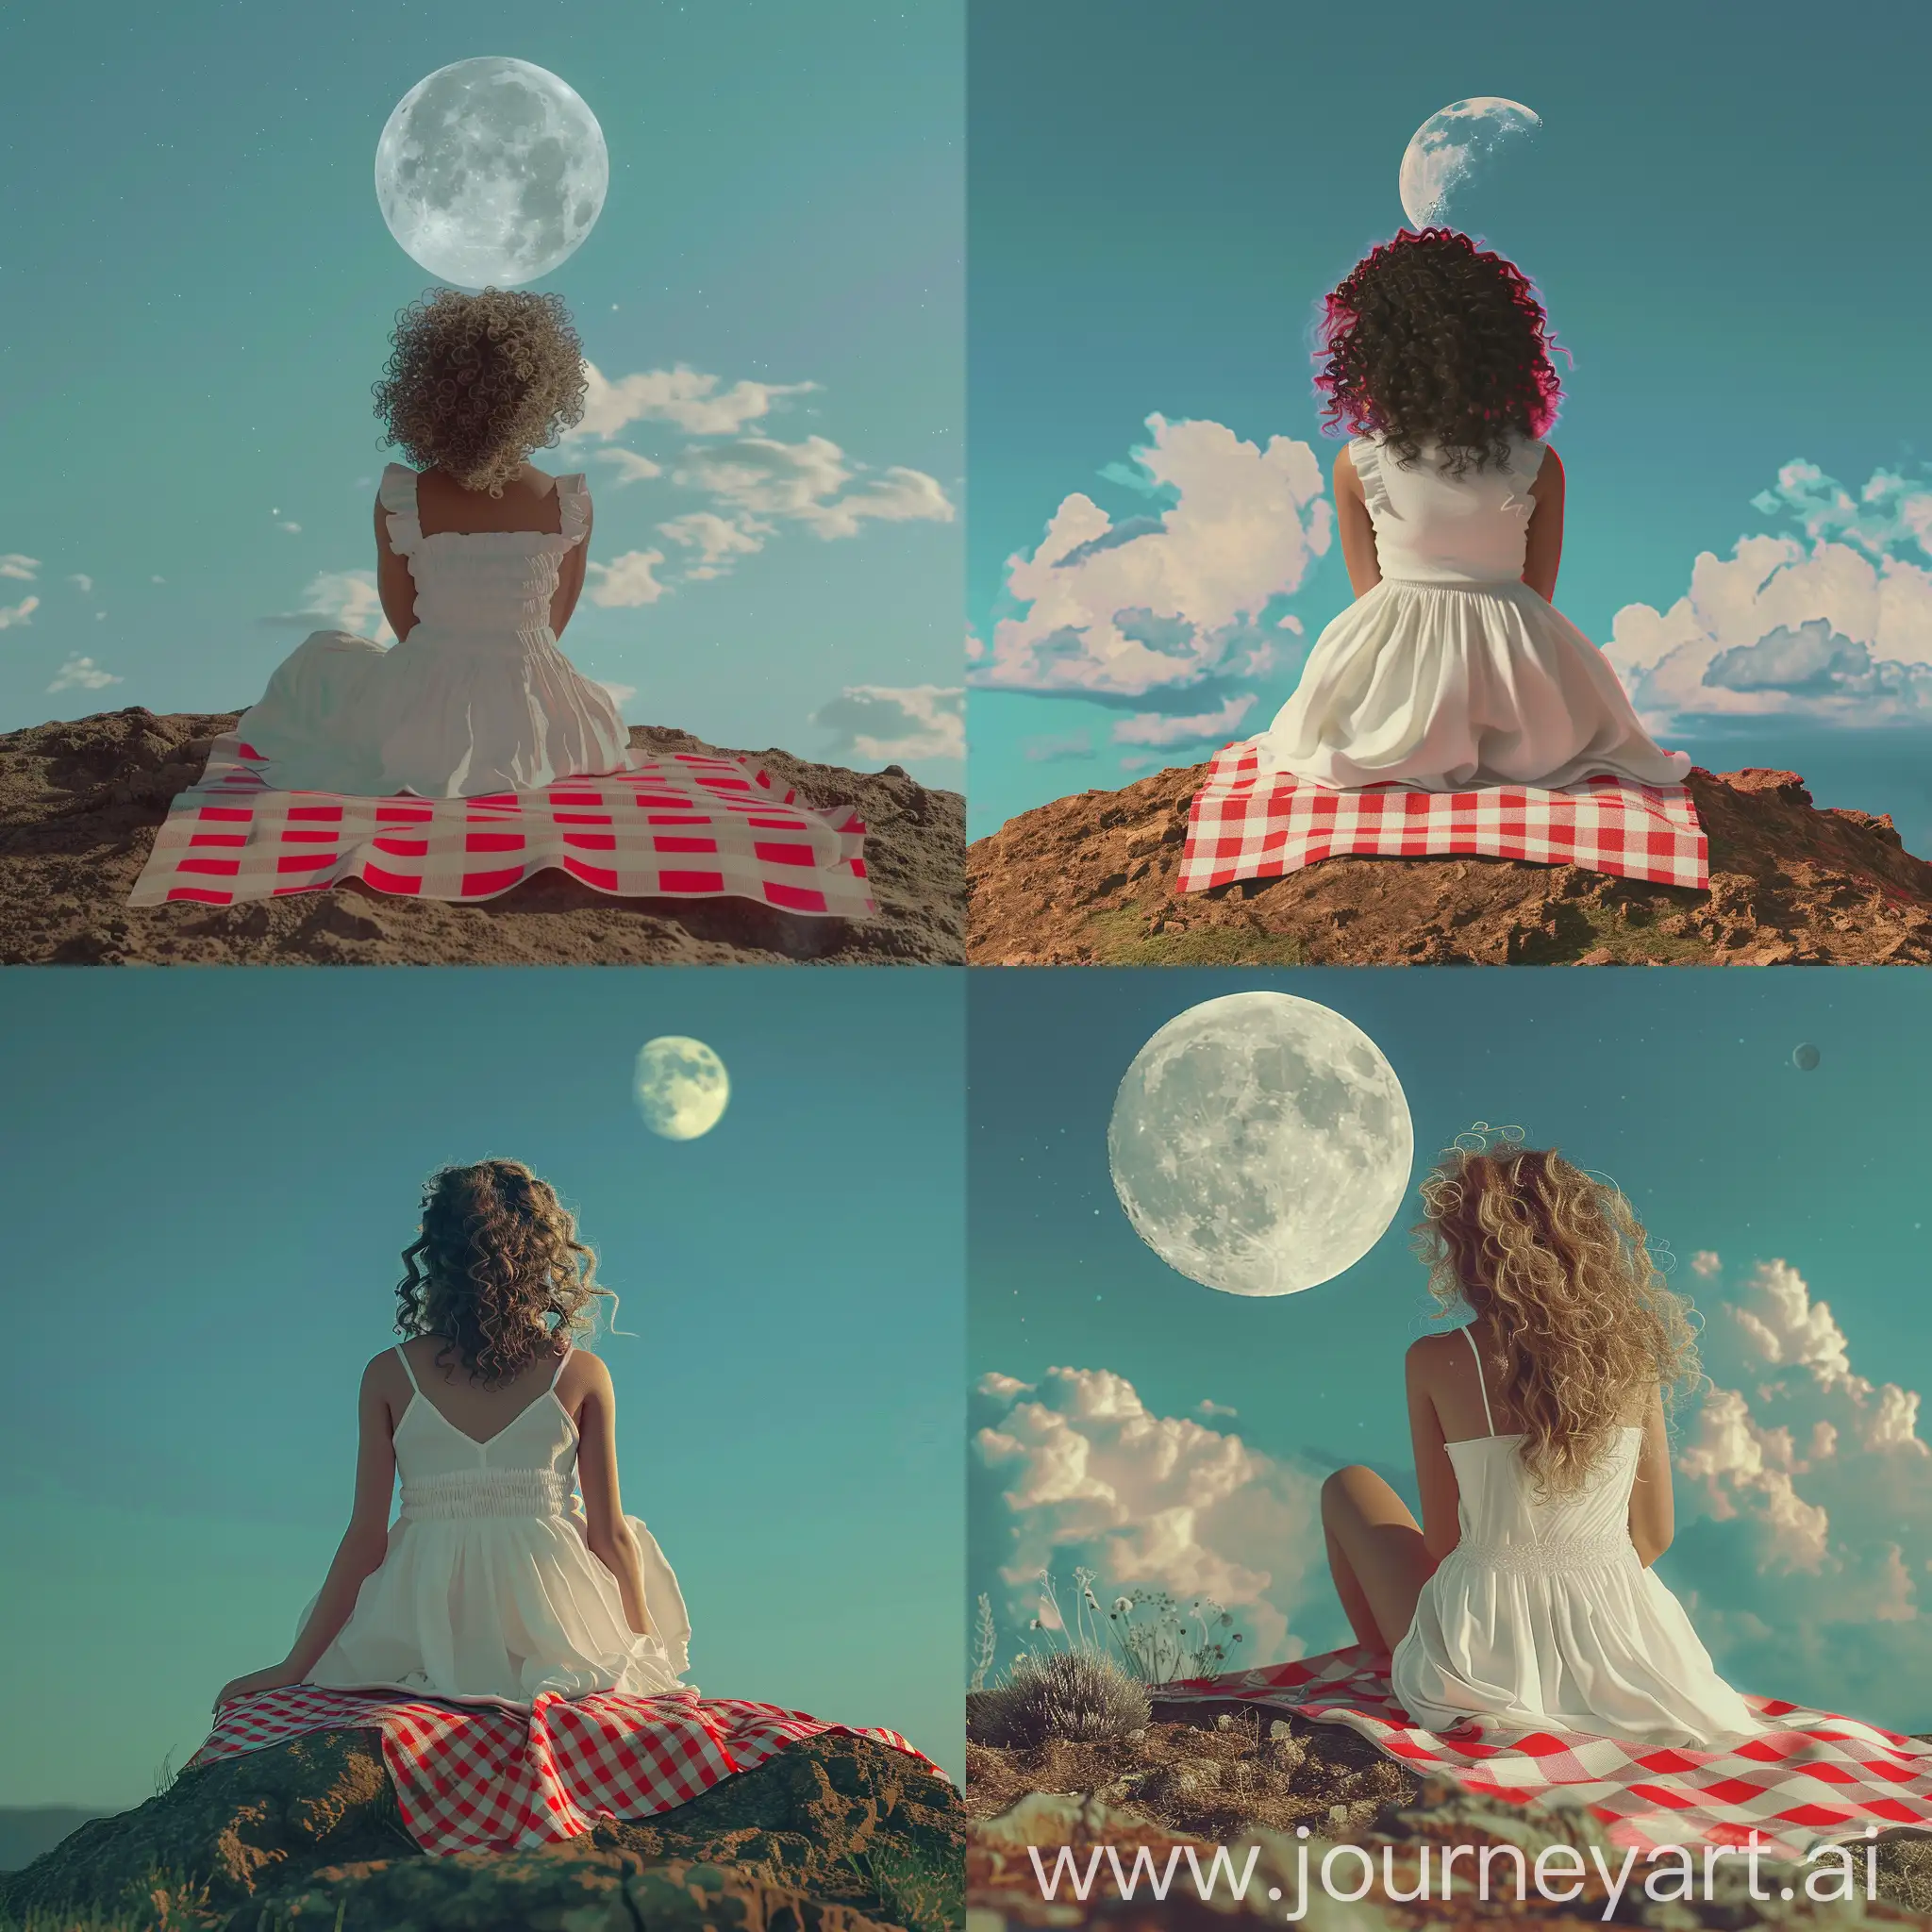 CurlyHaired-Girl-in-White-Dress-Enjoying-Moonlit-Picnic-on-Hill